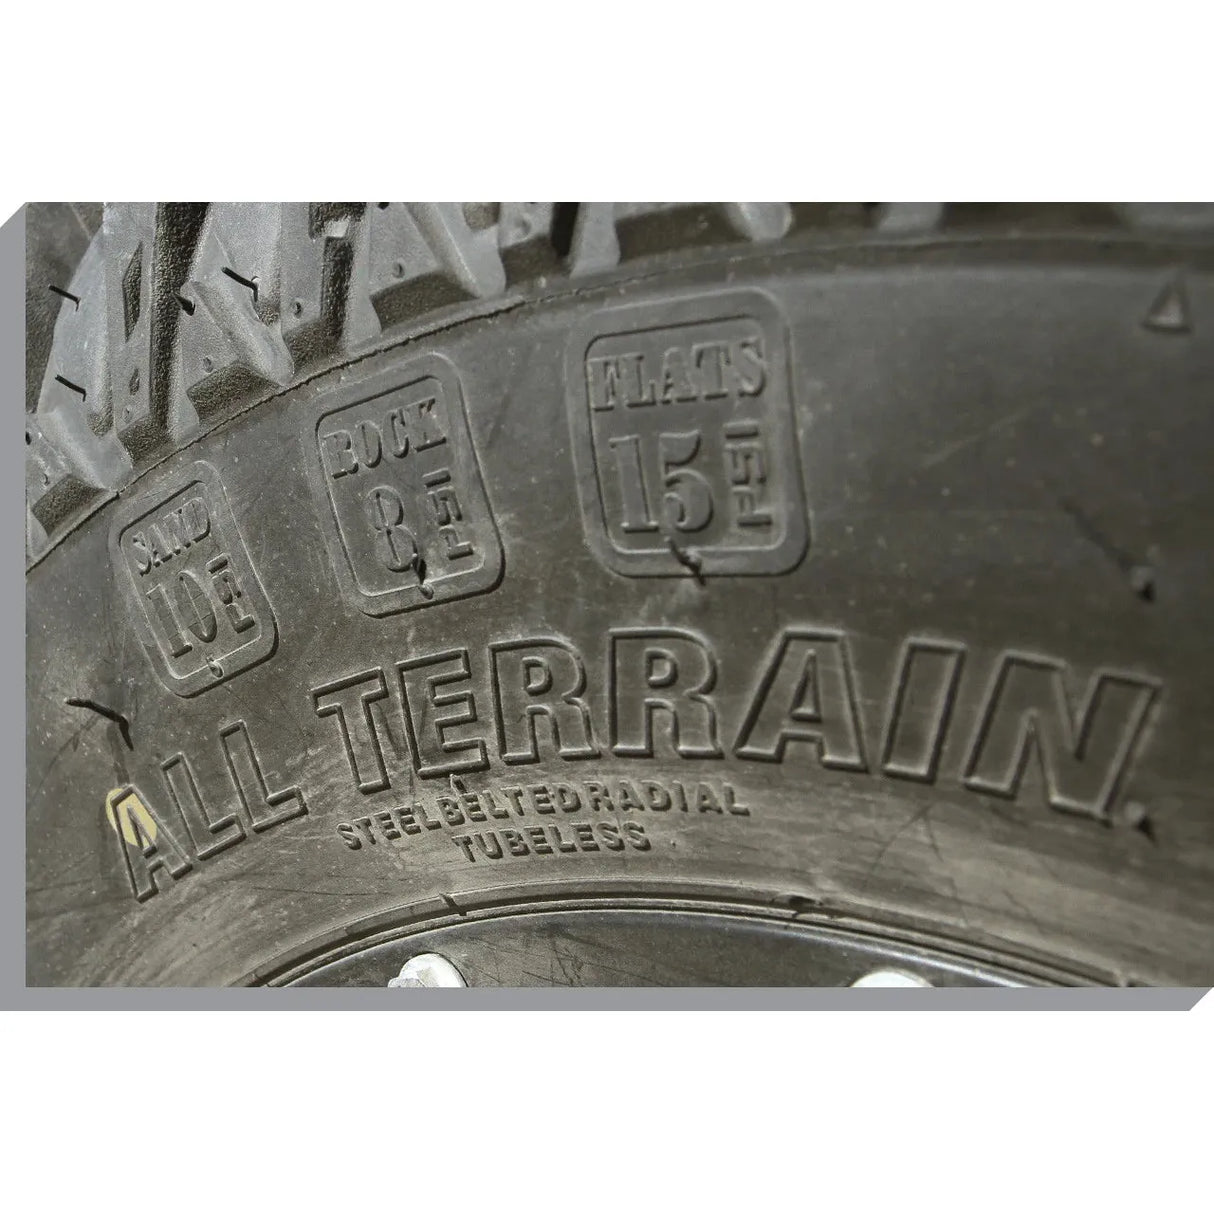 Tensor Tire Regulator All Terrain Tire - 30x10R15